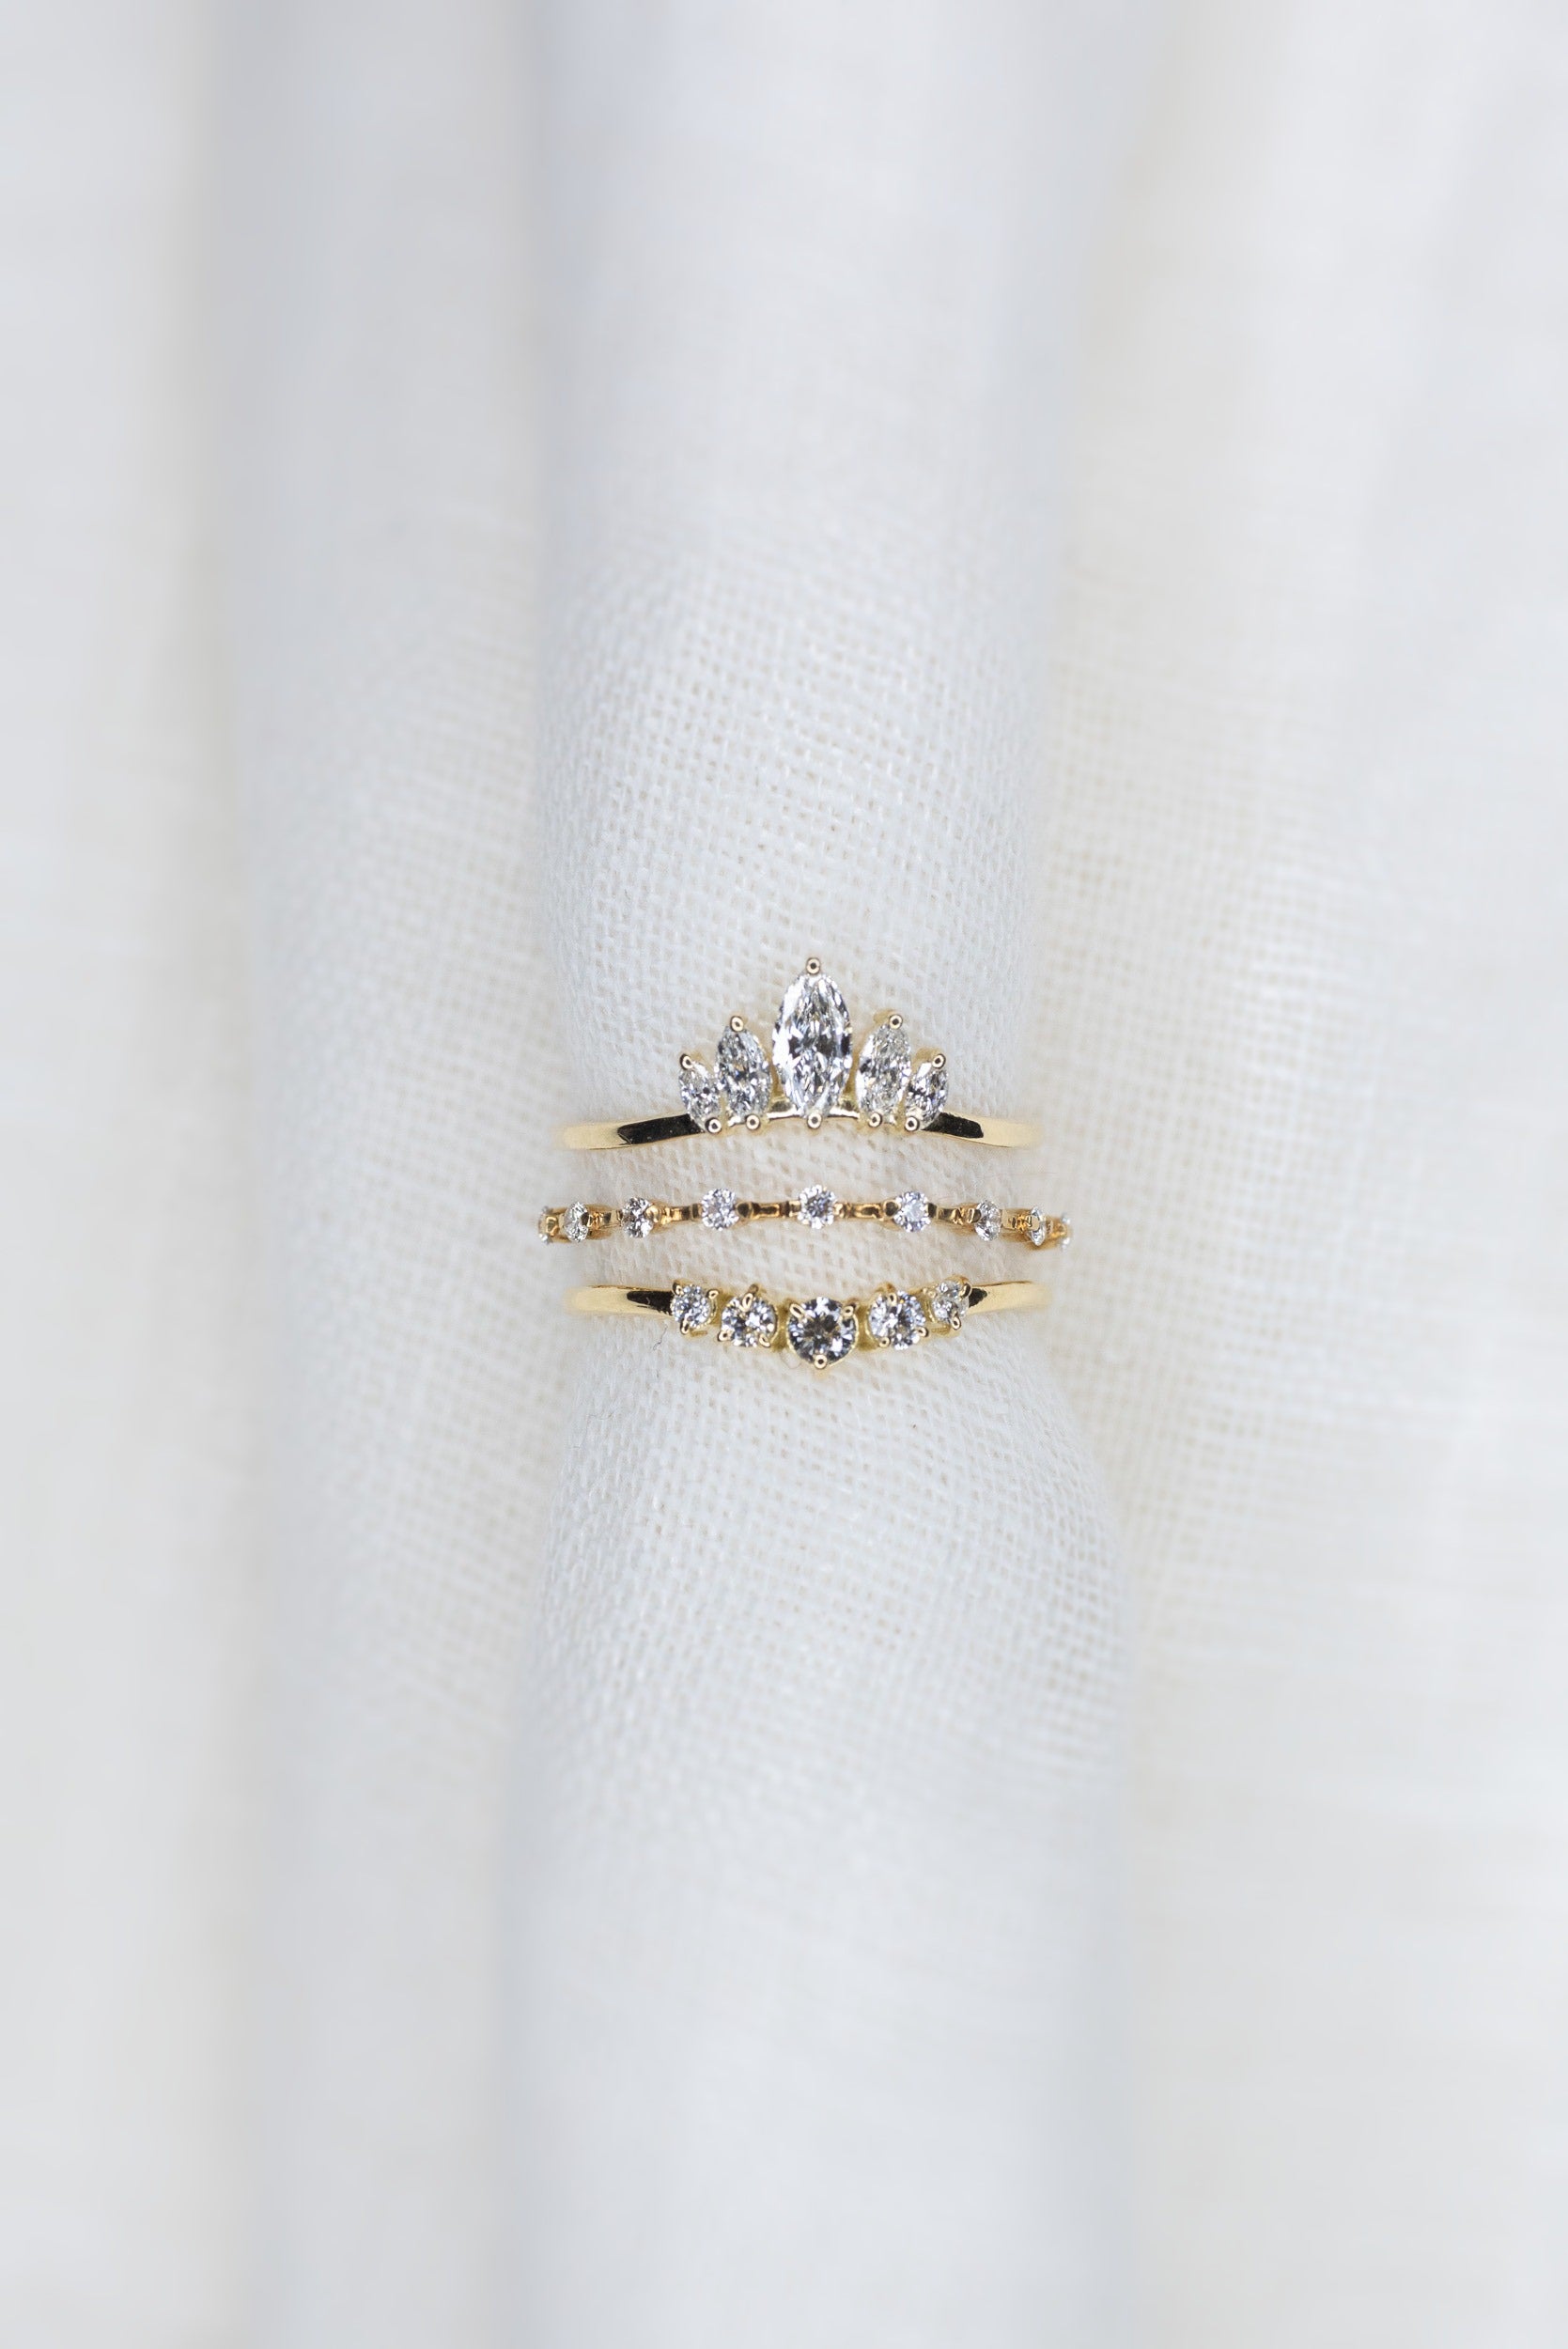 Crown of Arran - Lelya - bespoke engagement and wedding rings made in Scotland, UK